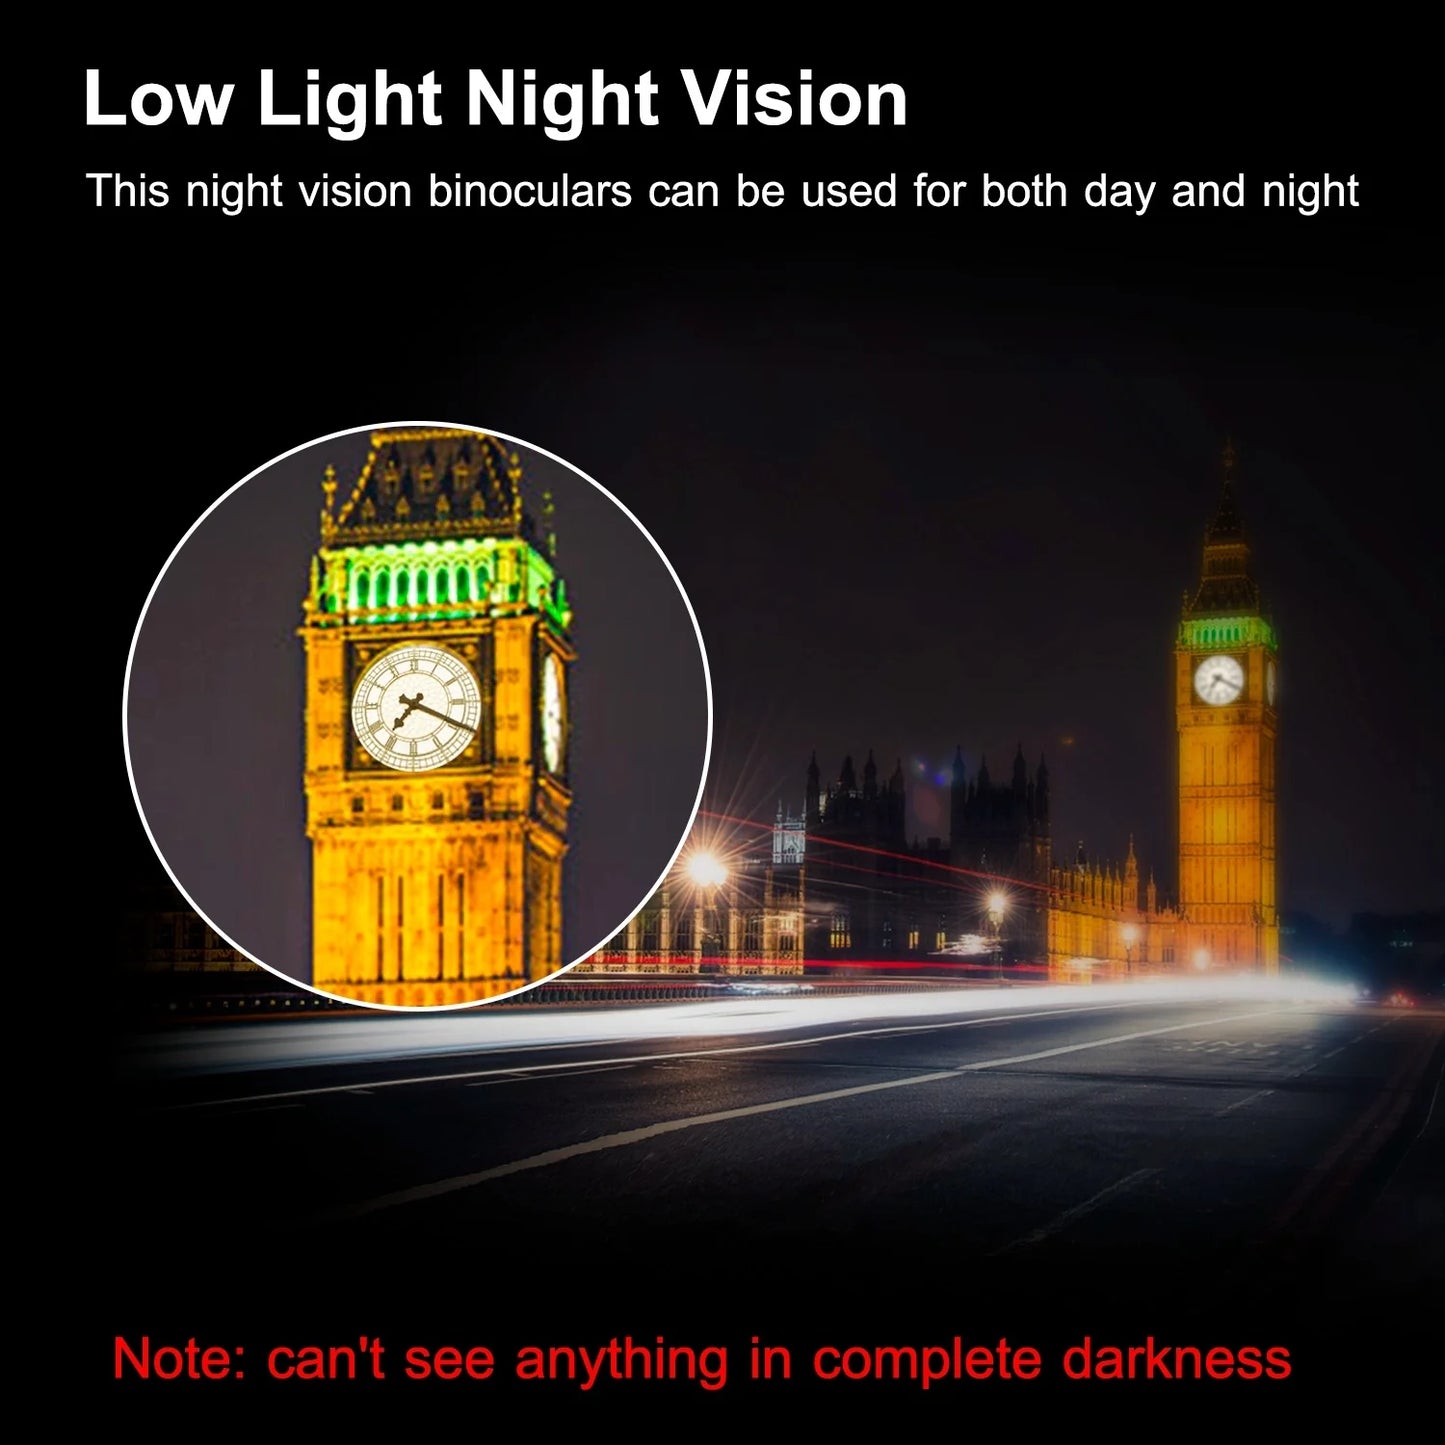 Product Title: Compact Binoculars with FMC Lens - Travel Hunting Gear High Power Zoom Binoculars - Night Vision Bird Watching Binocular